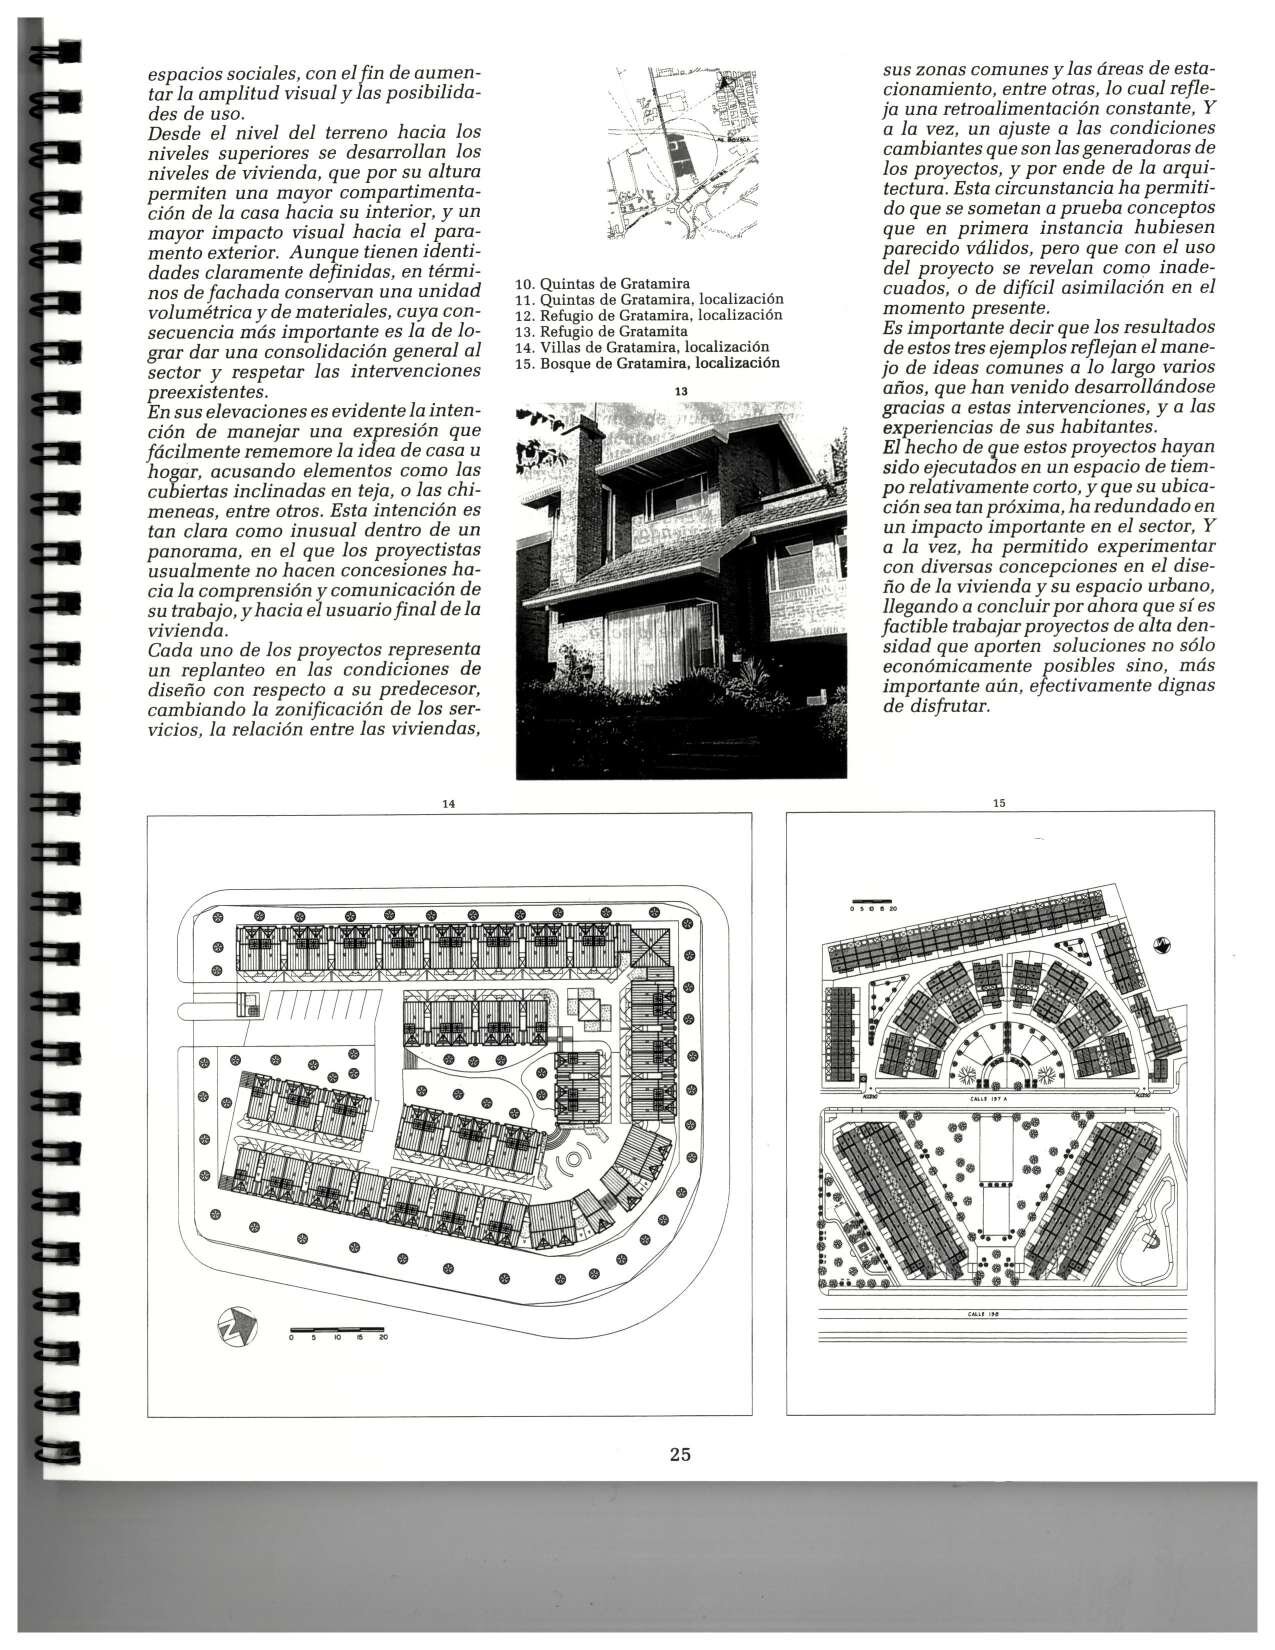 1995_Obra Contexto Urbano_Revista PROA_compressed_page-0025.jpg